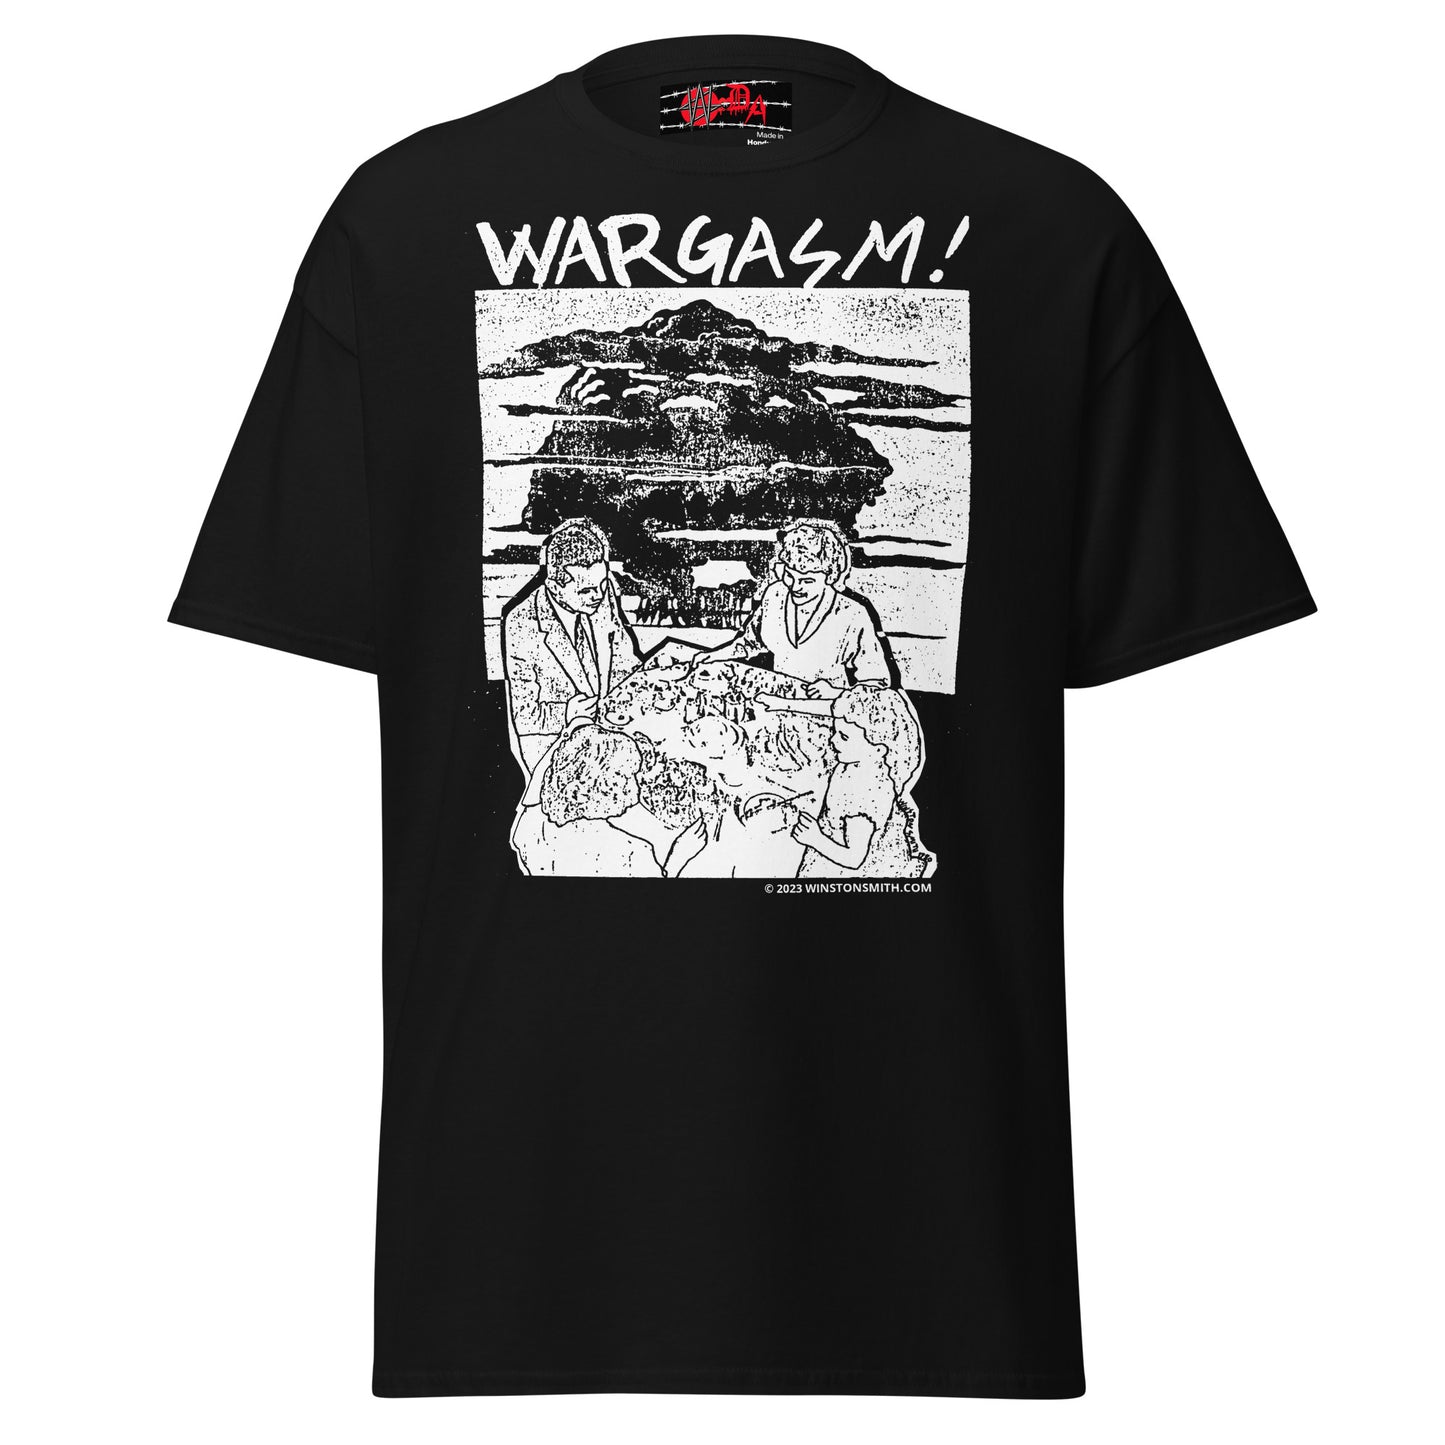 Winston Smith "Wargasm" T-Shirt